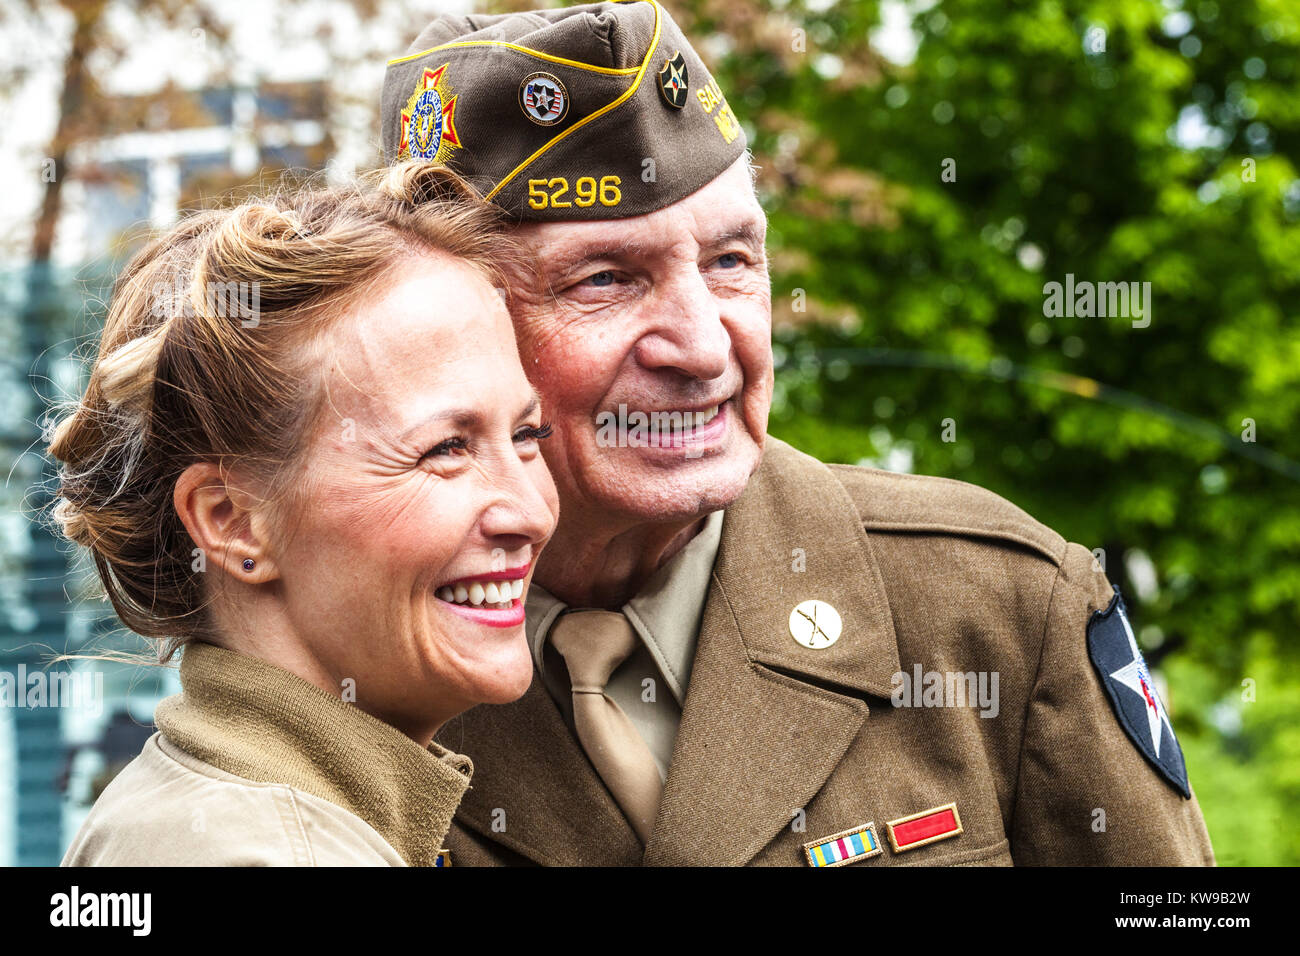 Couple in US Army uniform Celebrations of the liberated city, Plzen Czech Town, Pilsen Czech Republic Stock Photo